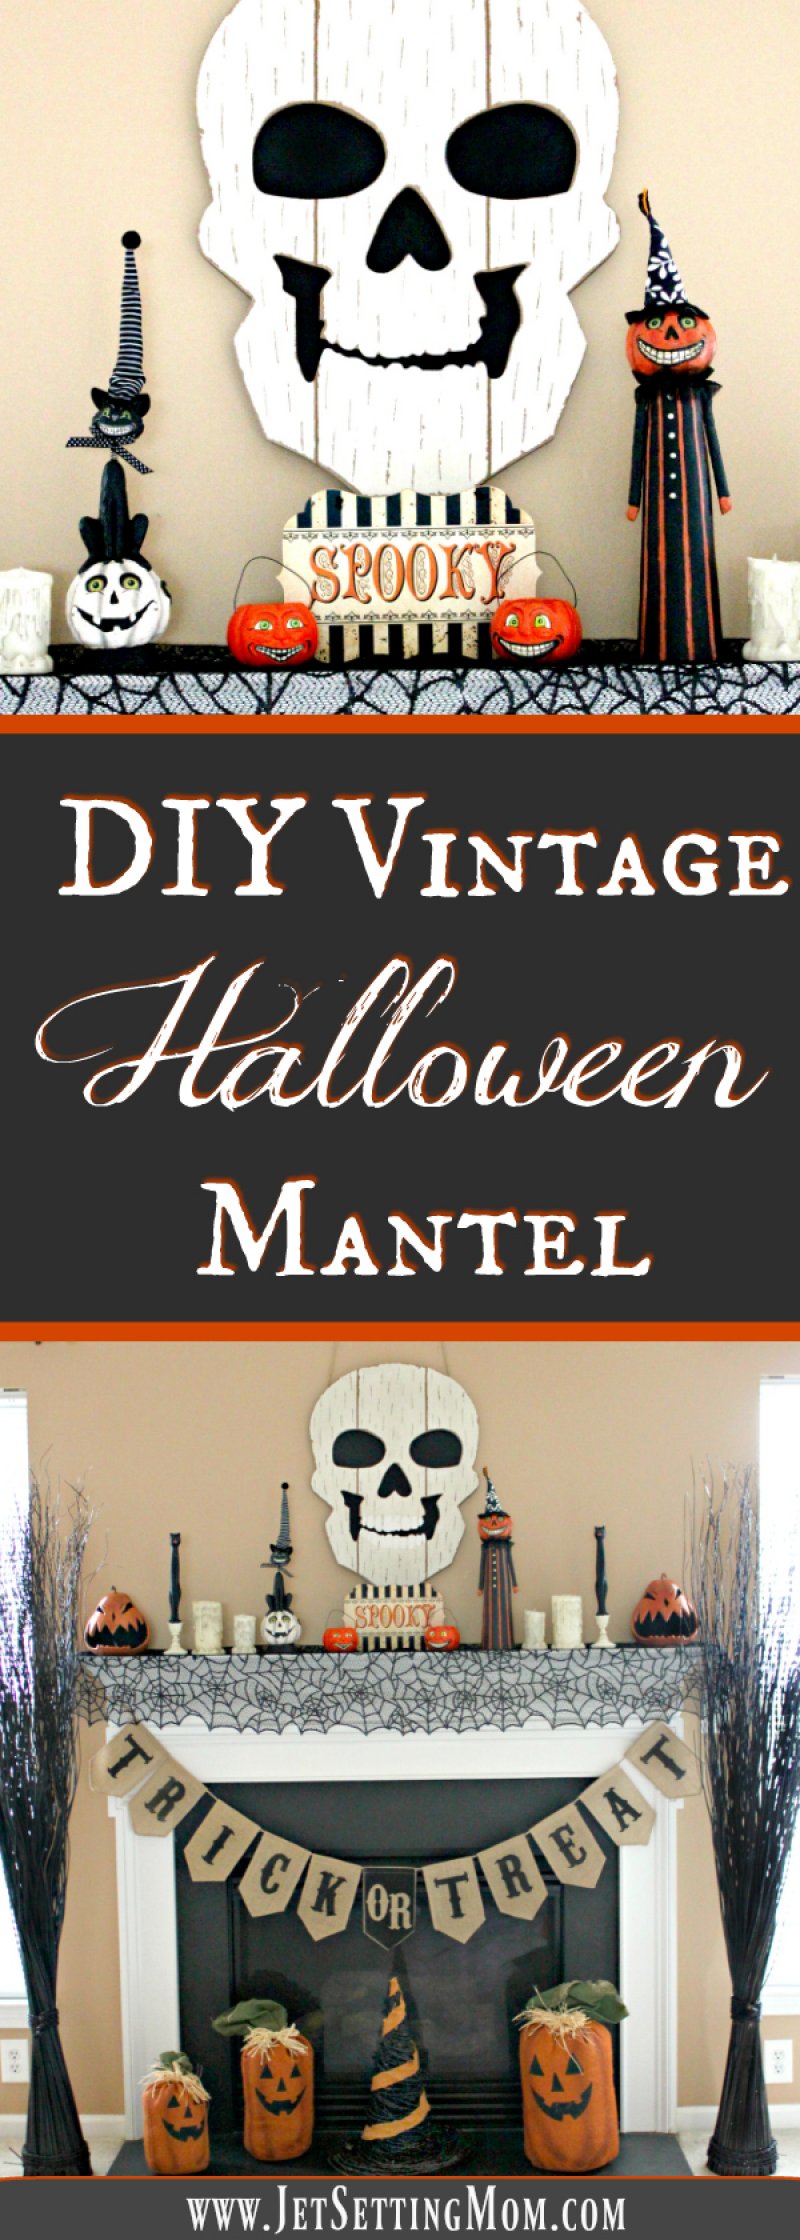 DIY vintage Halloween mantel refresh on a budget.